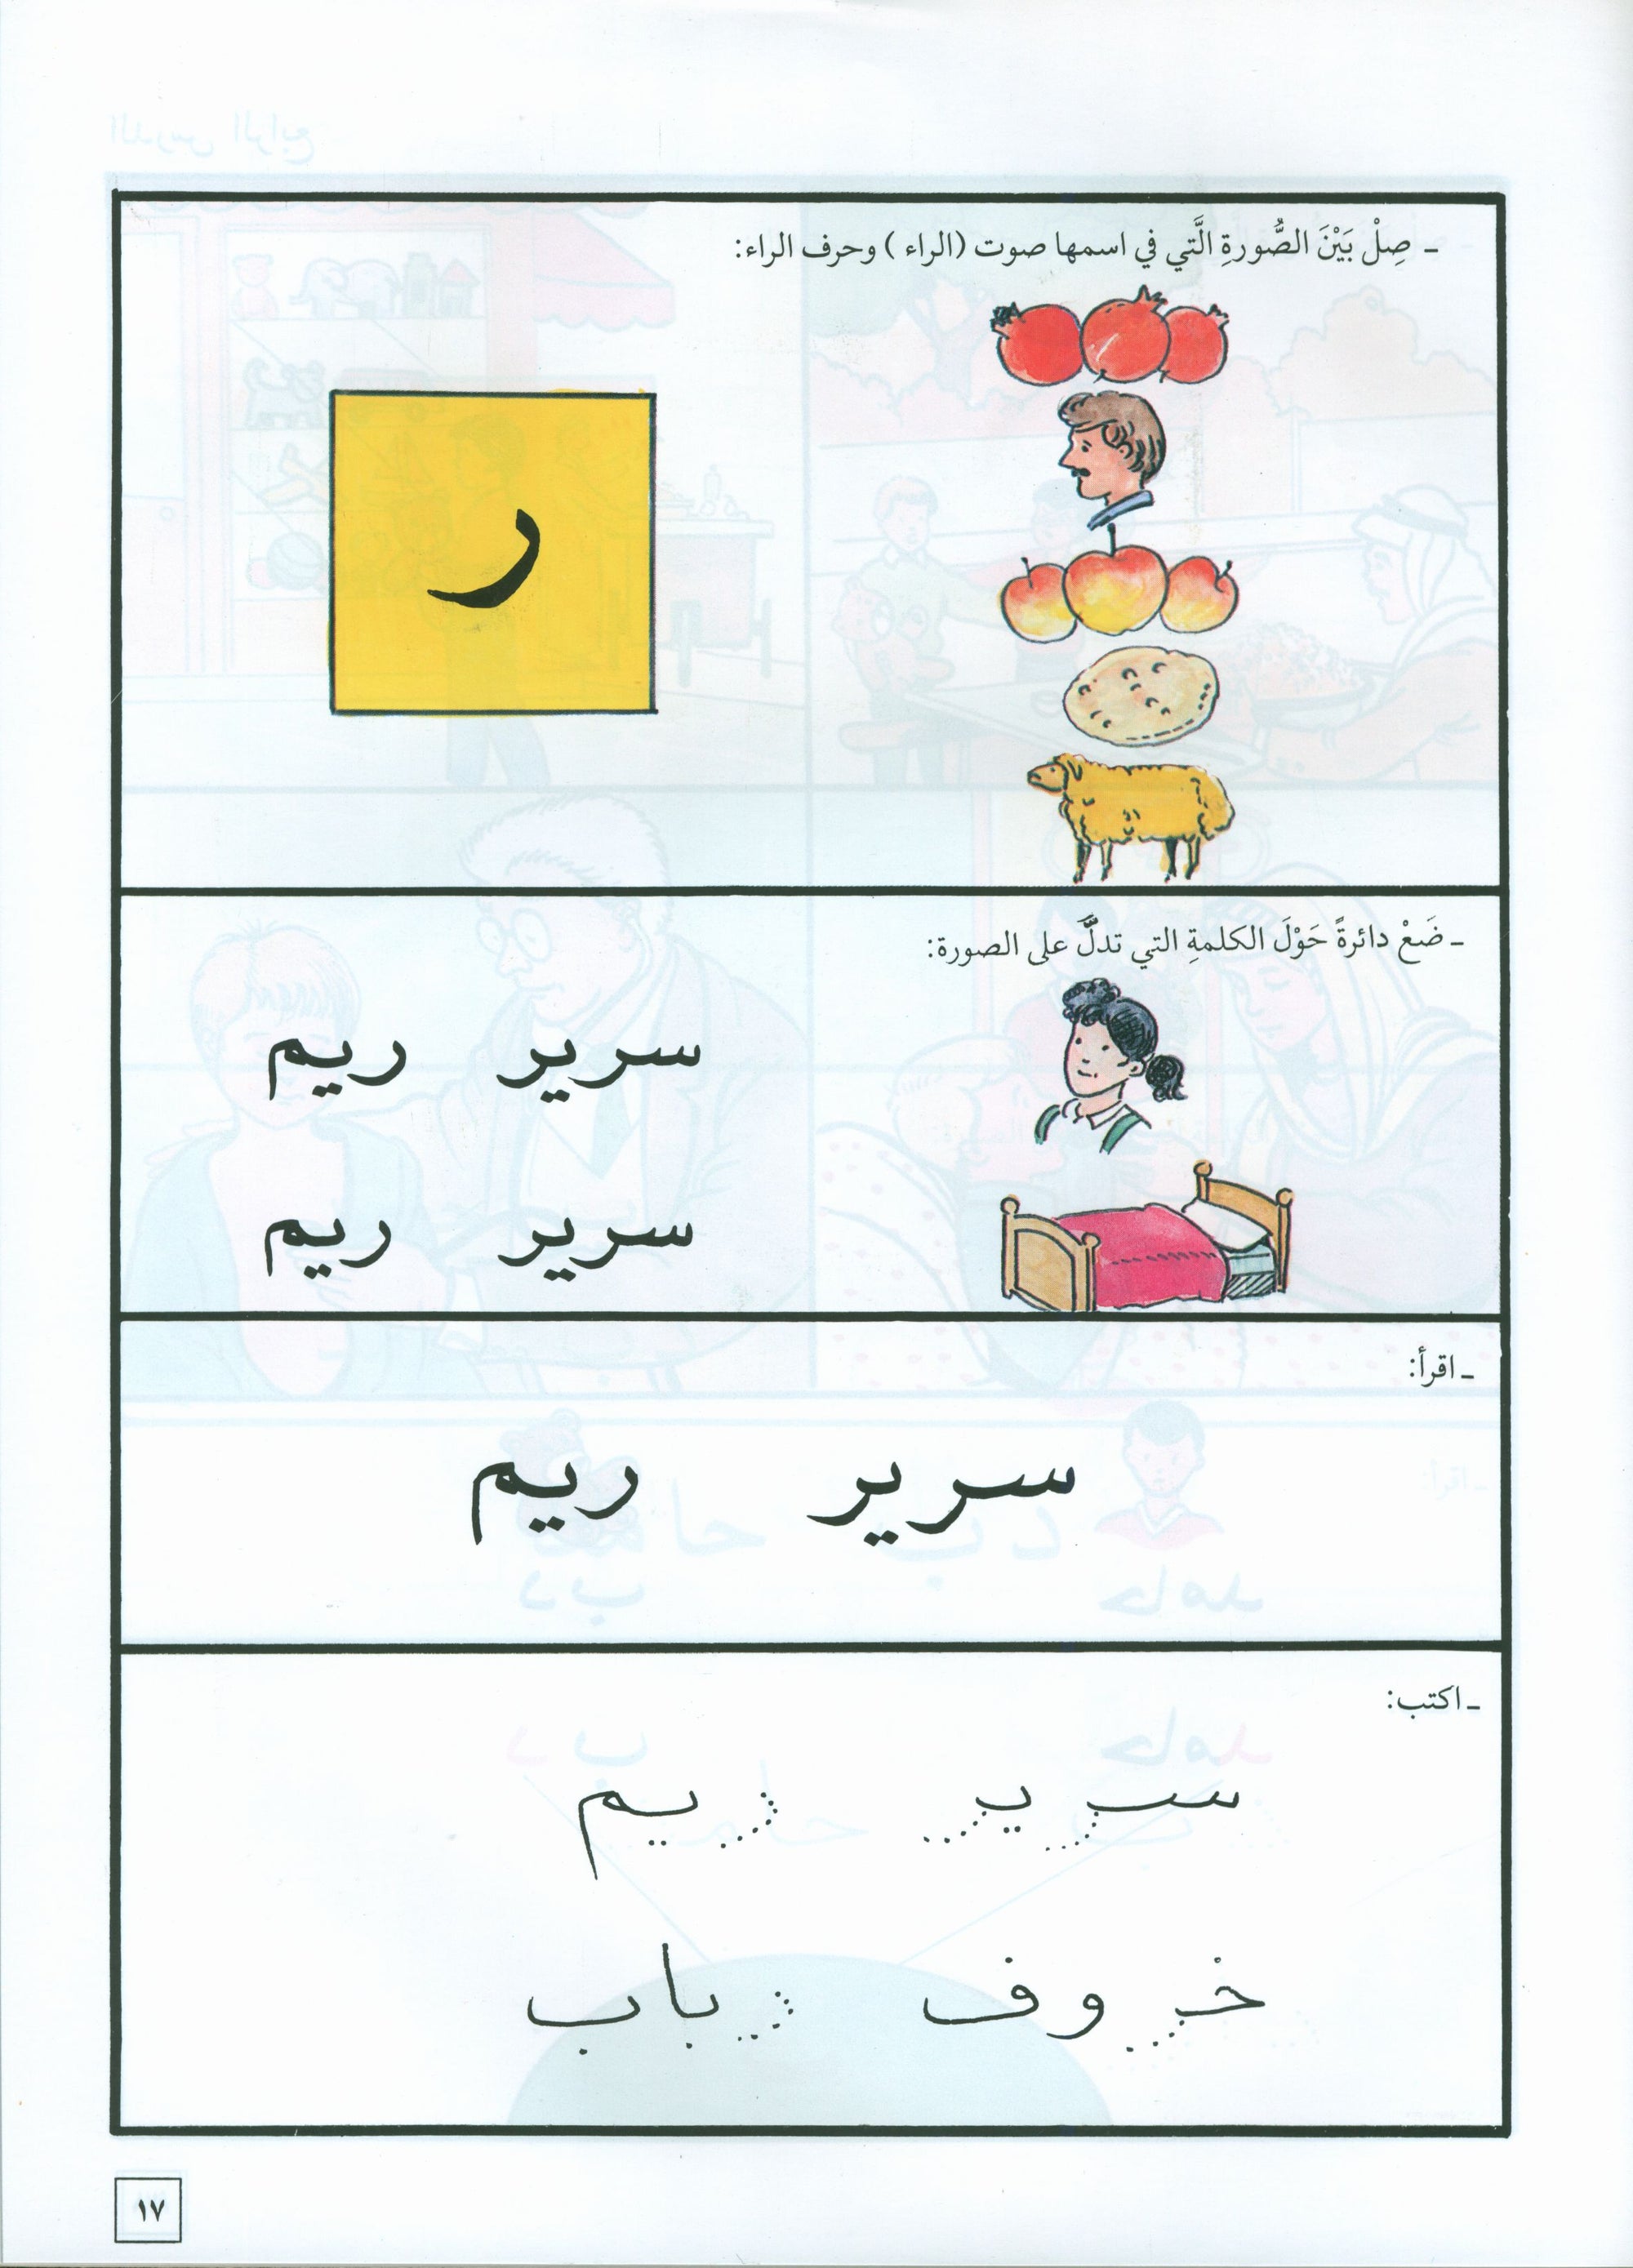 Hurry to Arabic Language KG 2 هيا الى العربية تمهيدي